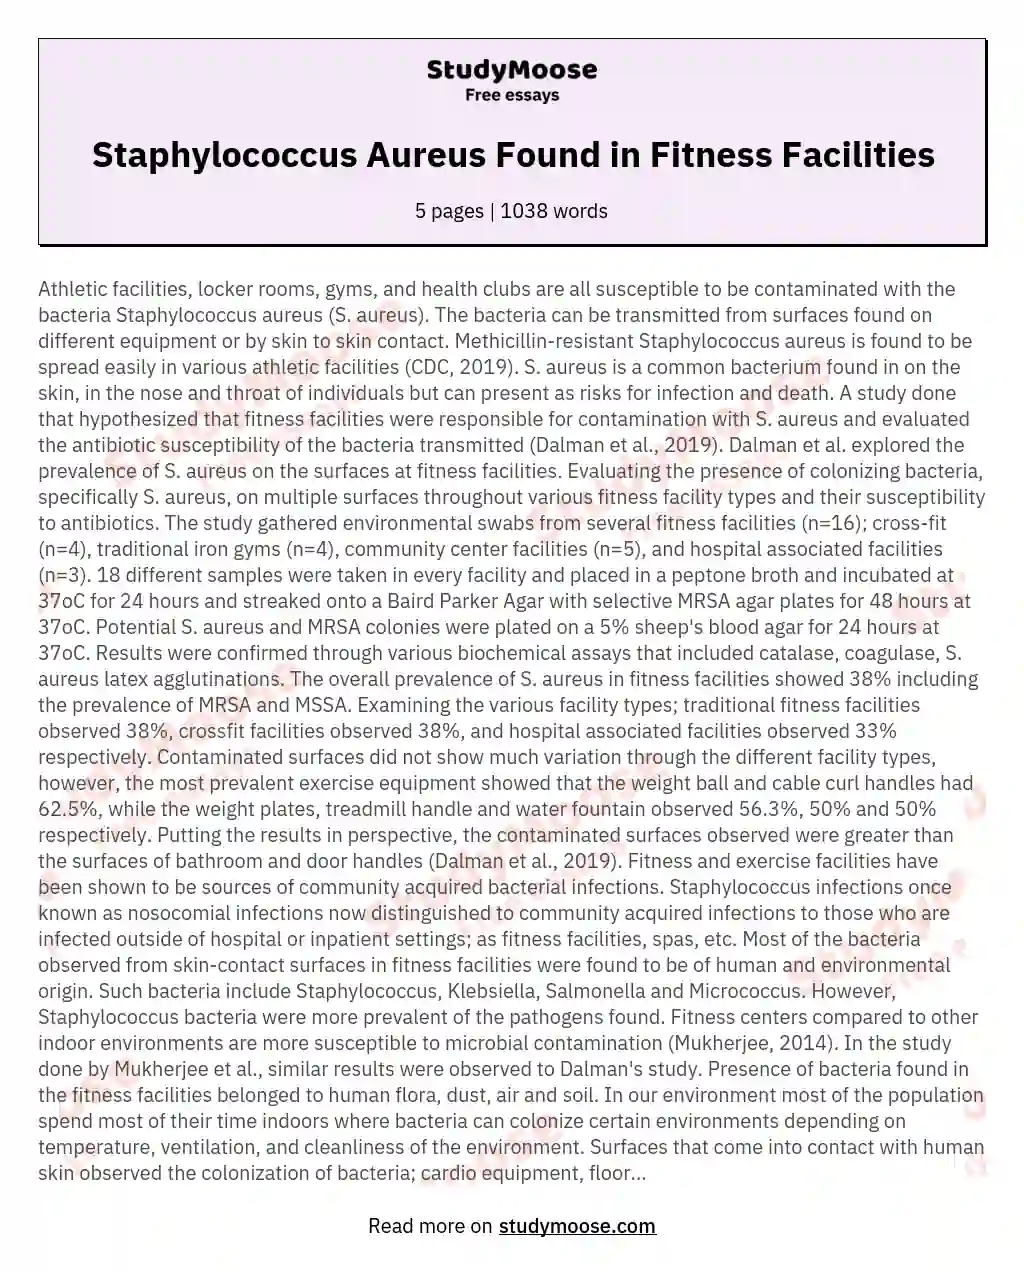 Staphylococcus Aureus Found in Fitness Facilities essay